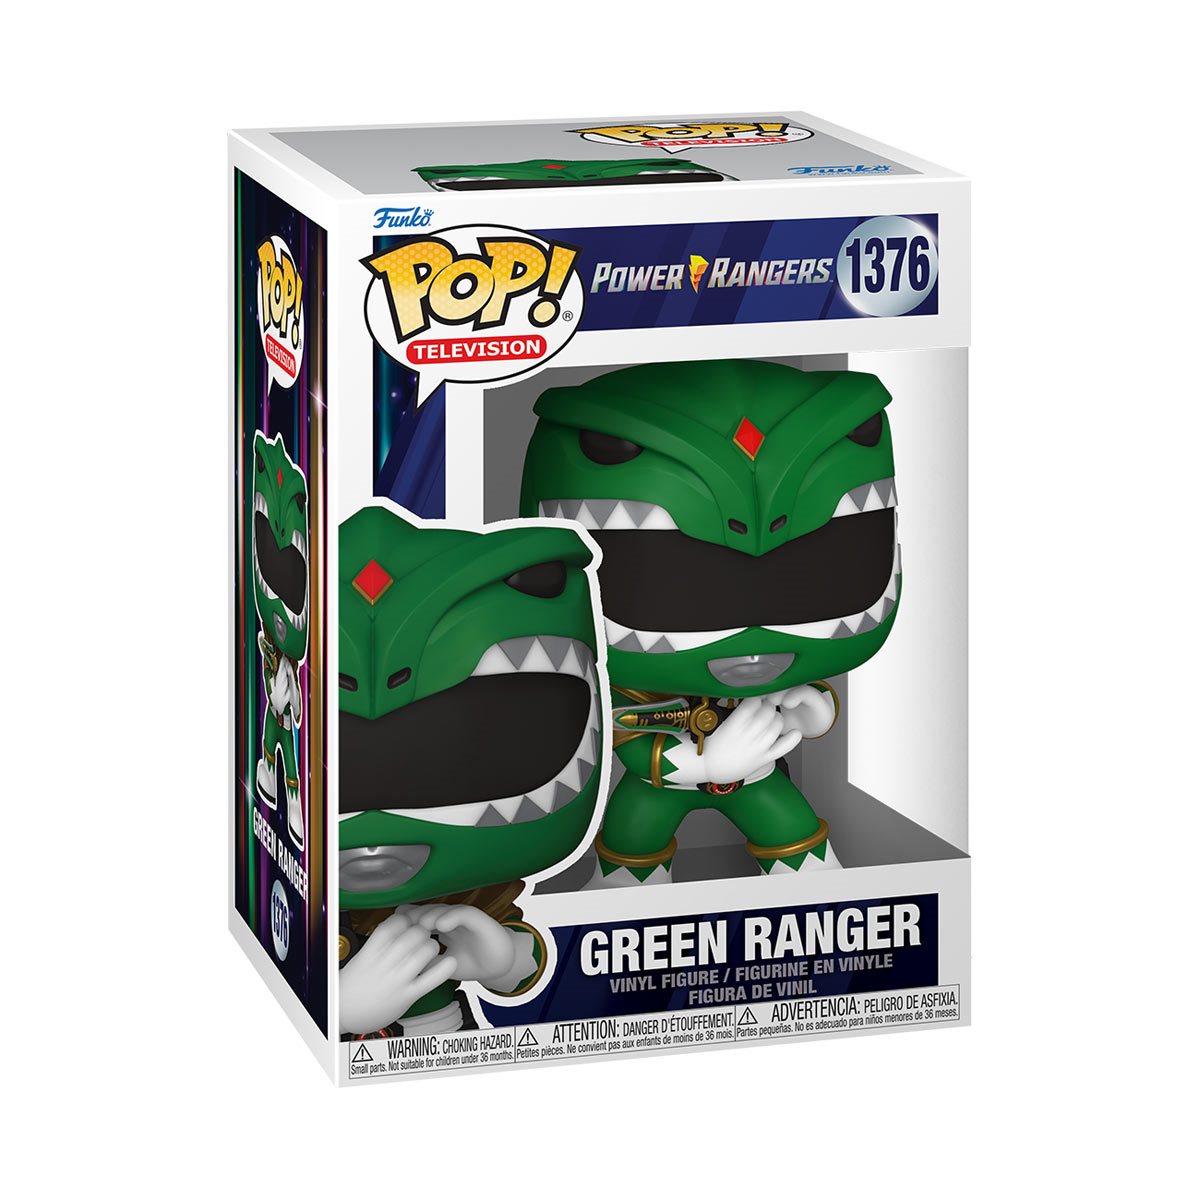 Mighty Morphin Green Ranger 30th Anniversary Pop! Vinyl Figure